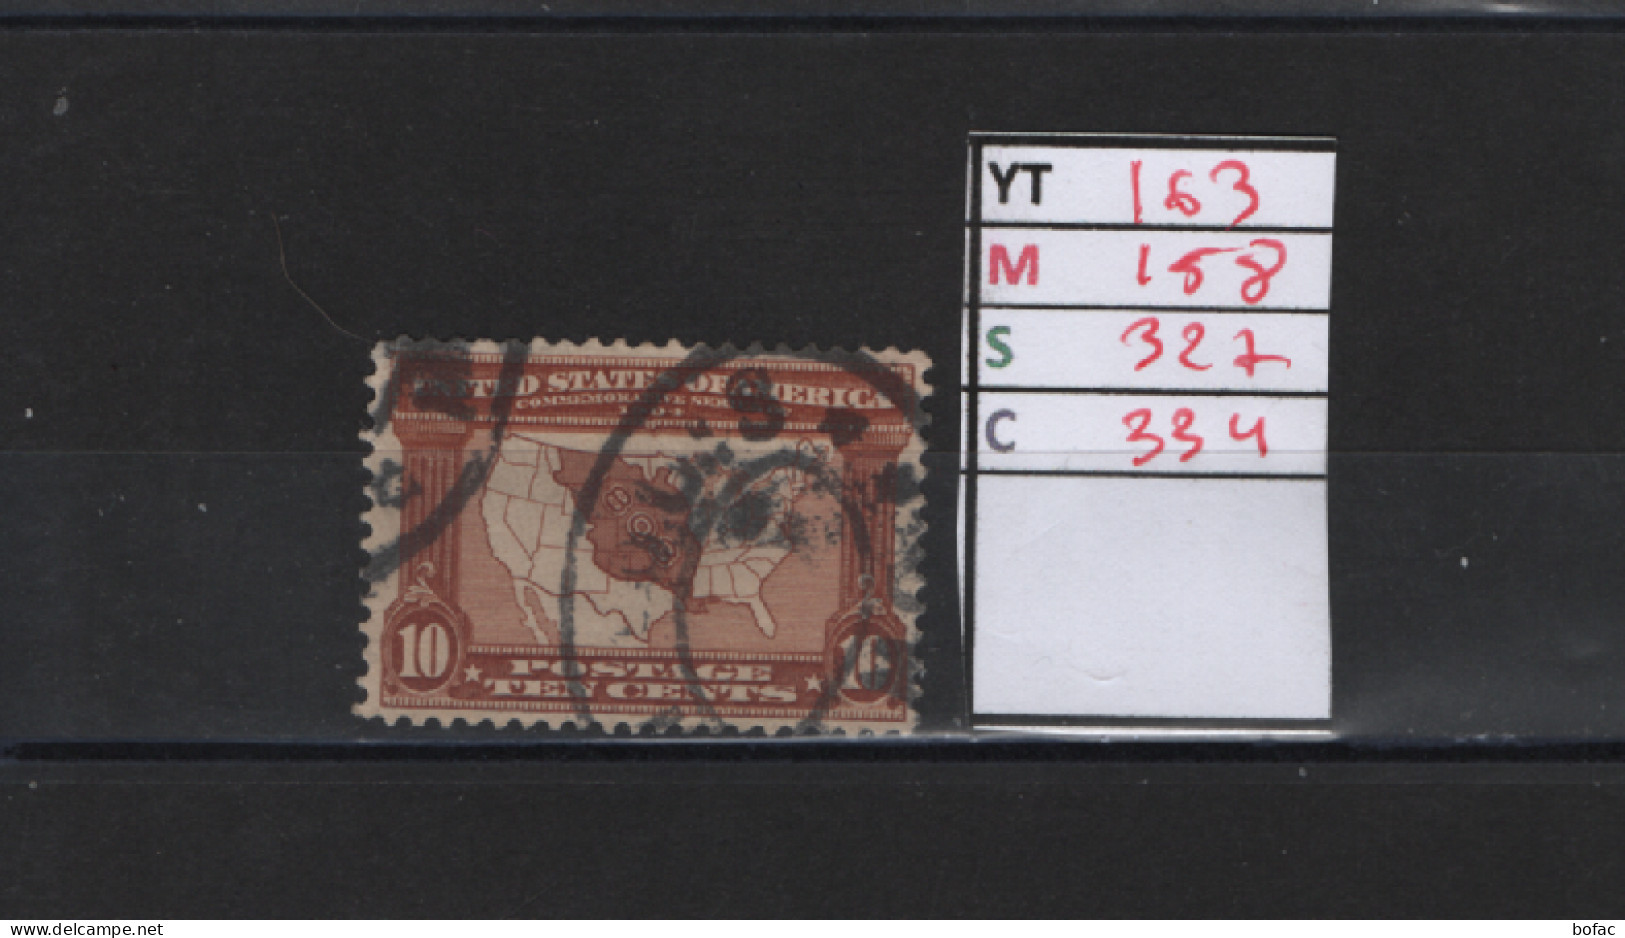 PRIX FIXE Obl 163 YT158 MIC 327 SCOT 334 GIB Carte 1904 Etats Unis 58/05 - Used Stamps